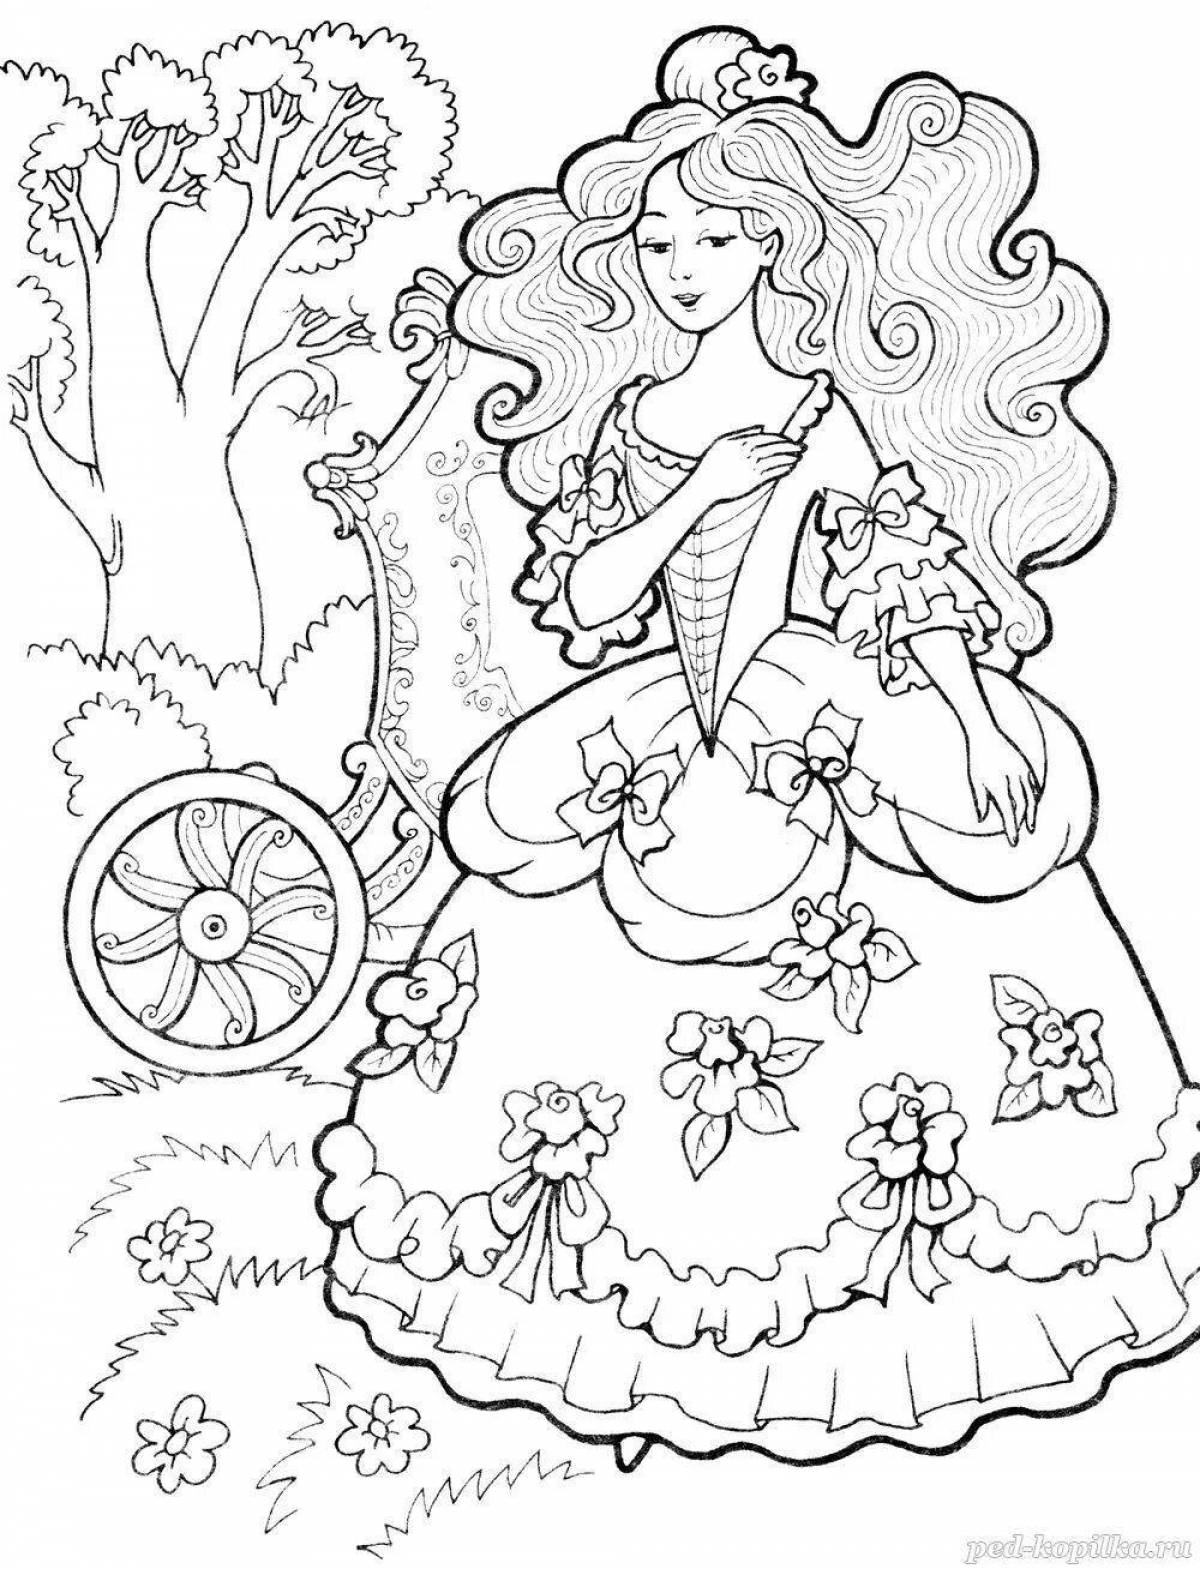 Fairy coloring book for preschoolers